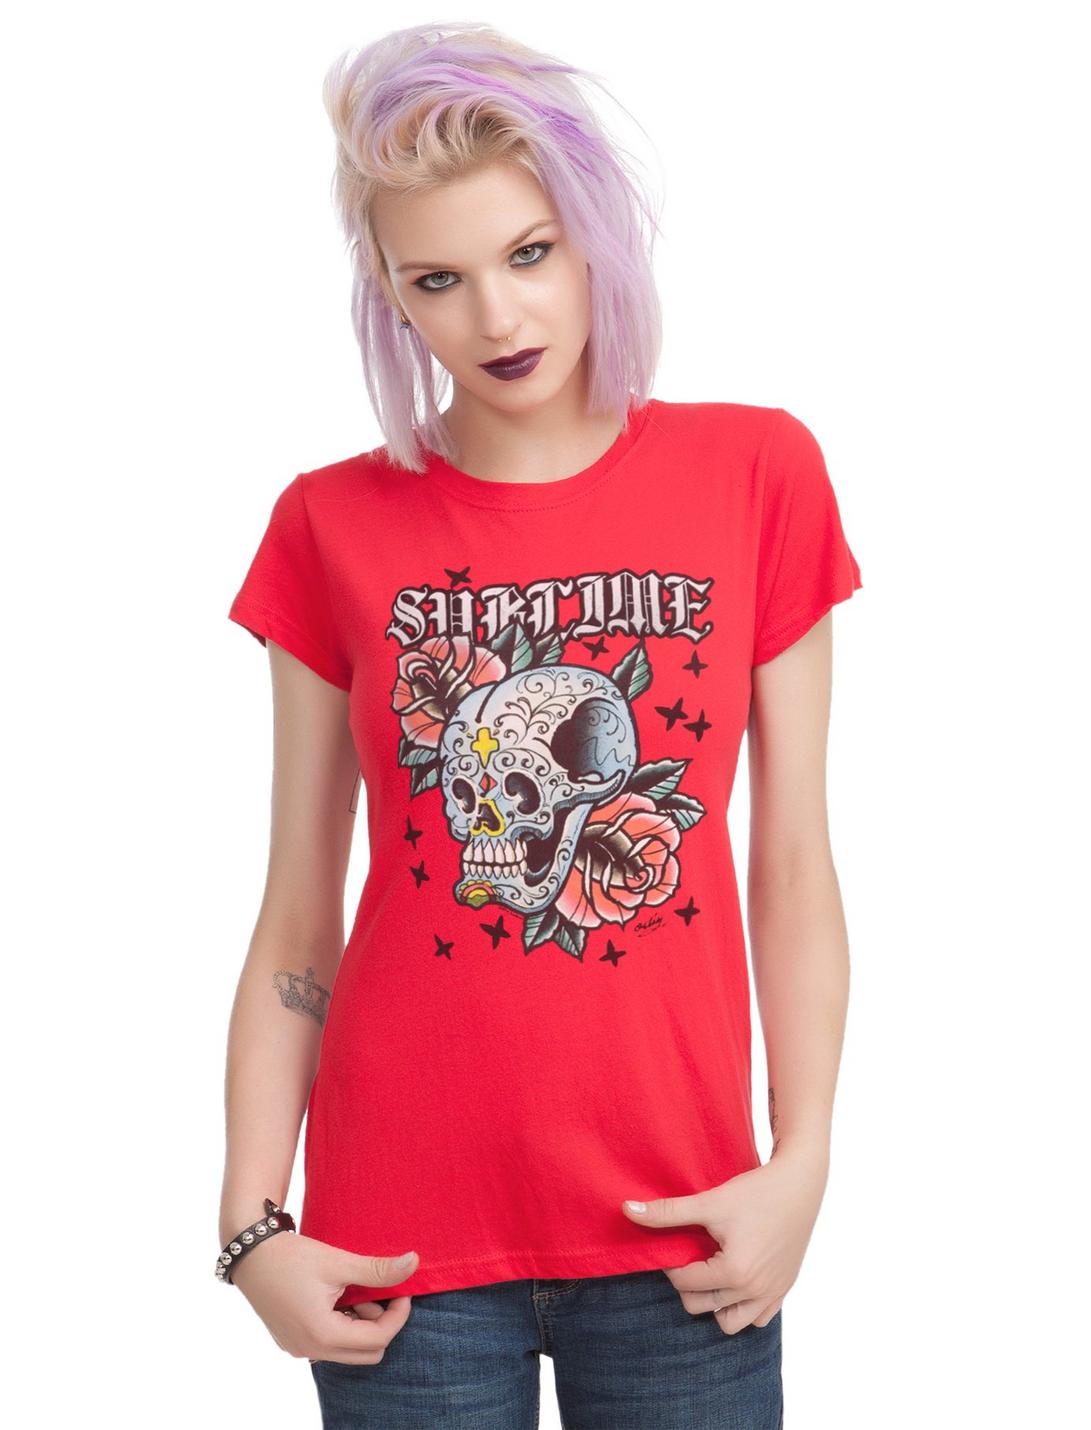 Sublime Sugar Skull Logo Girls T-Shirt, RED, hi-res